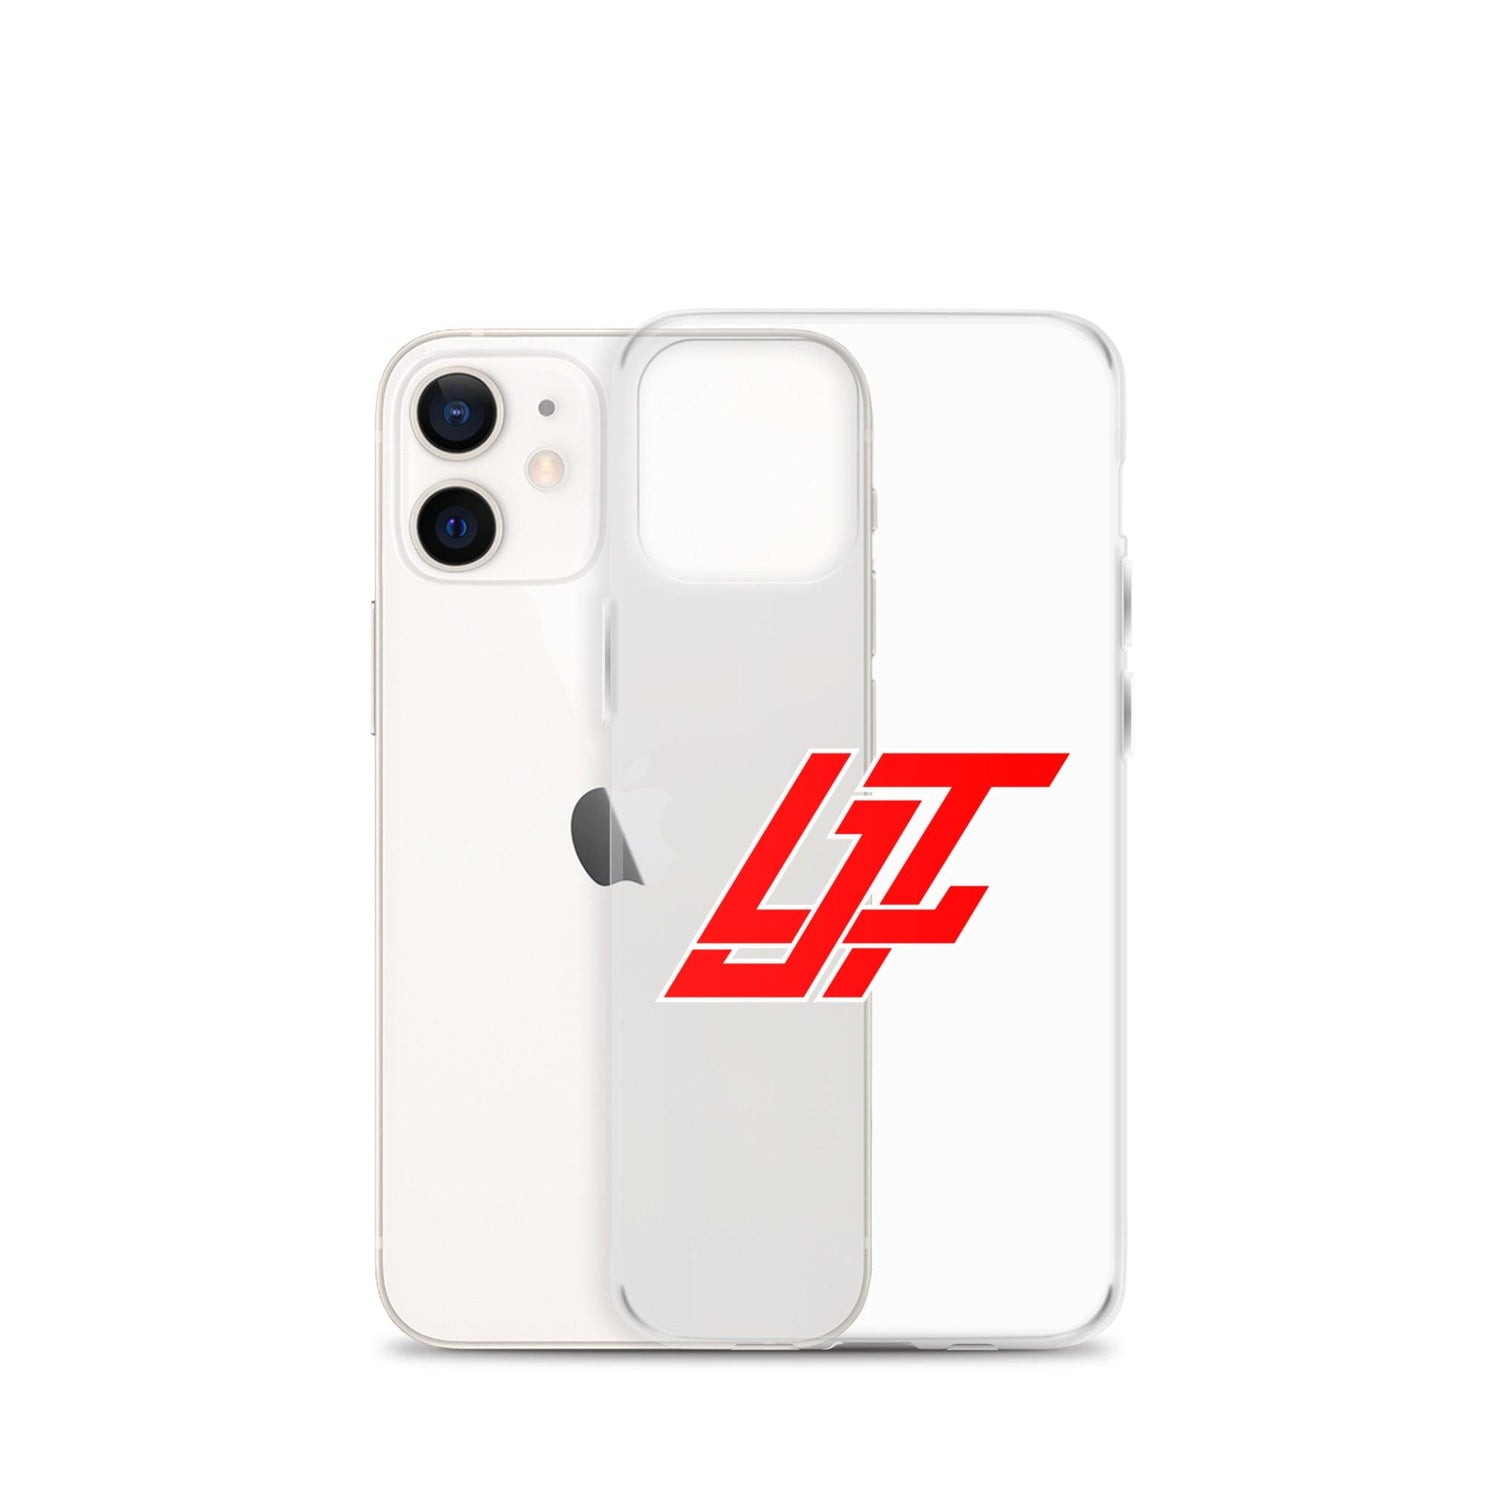 LJ Thomas "LJT" iPhone Case - Fan Arch